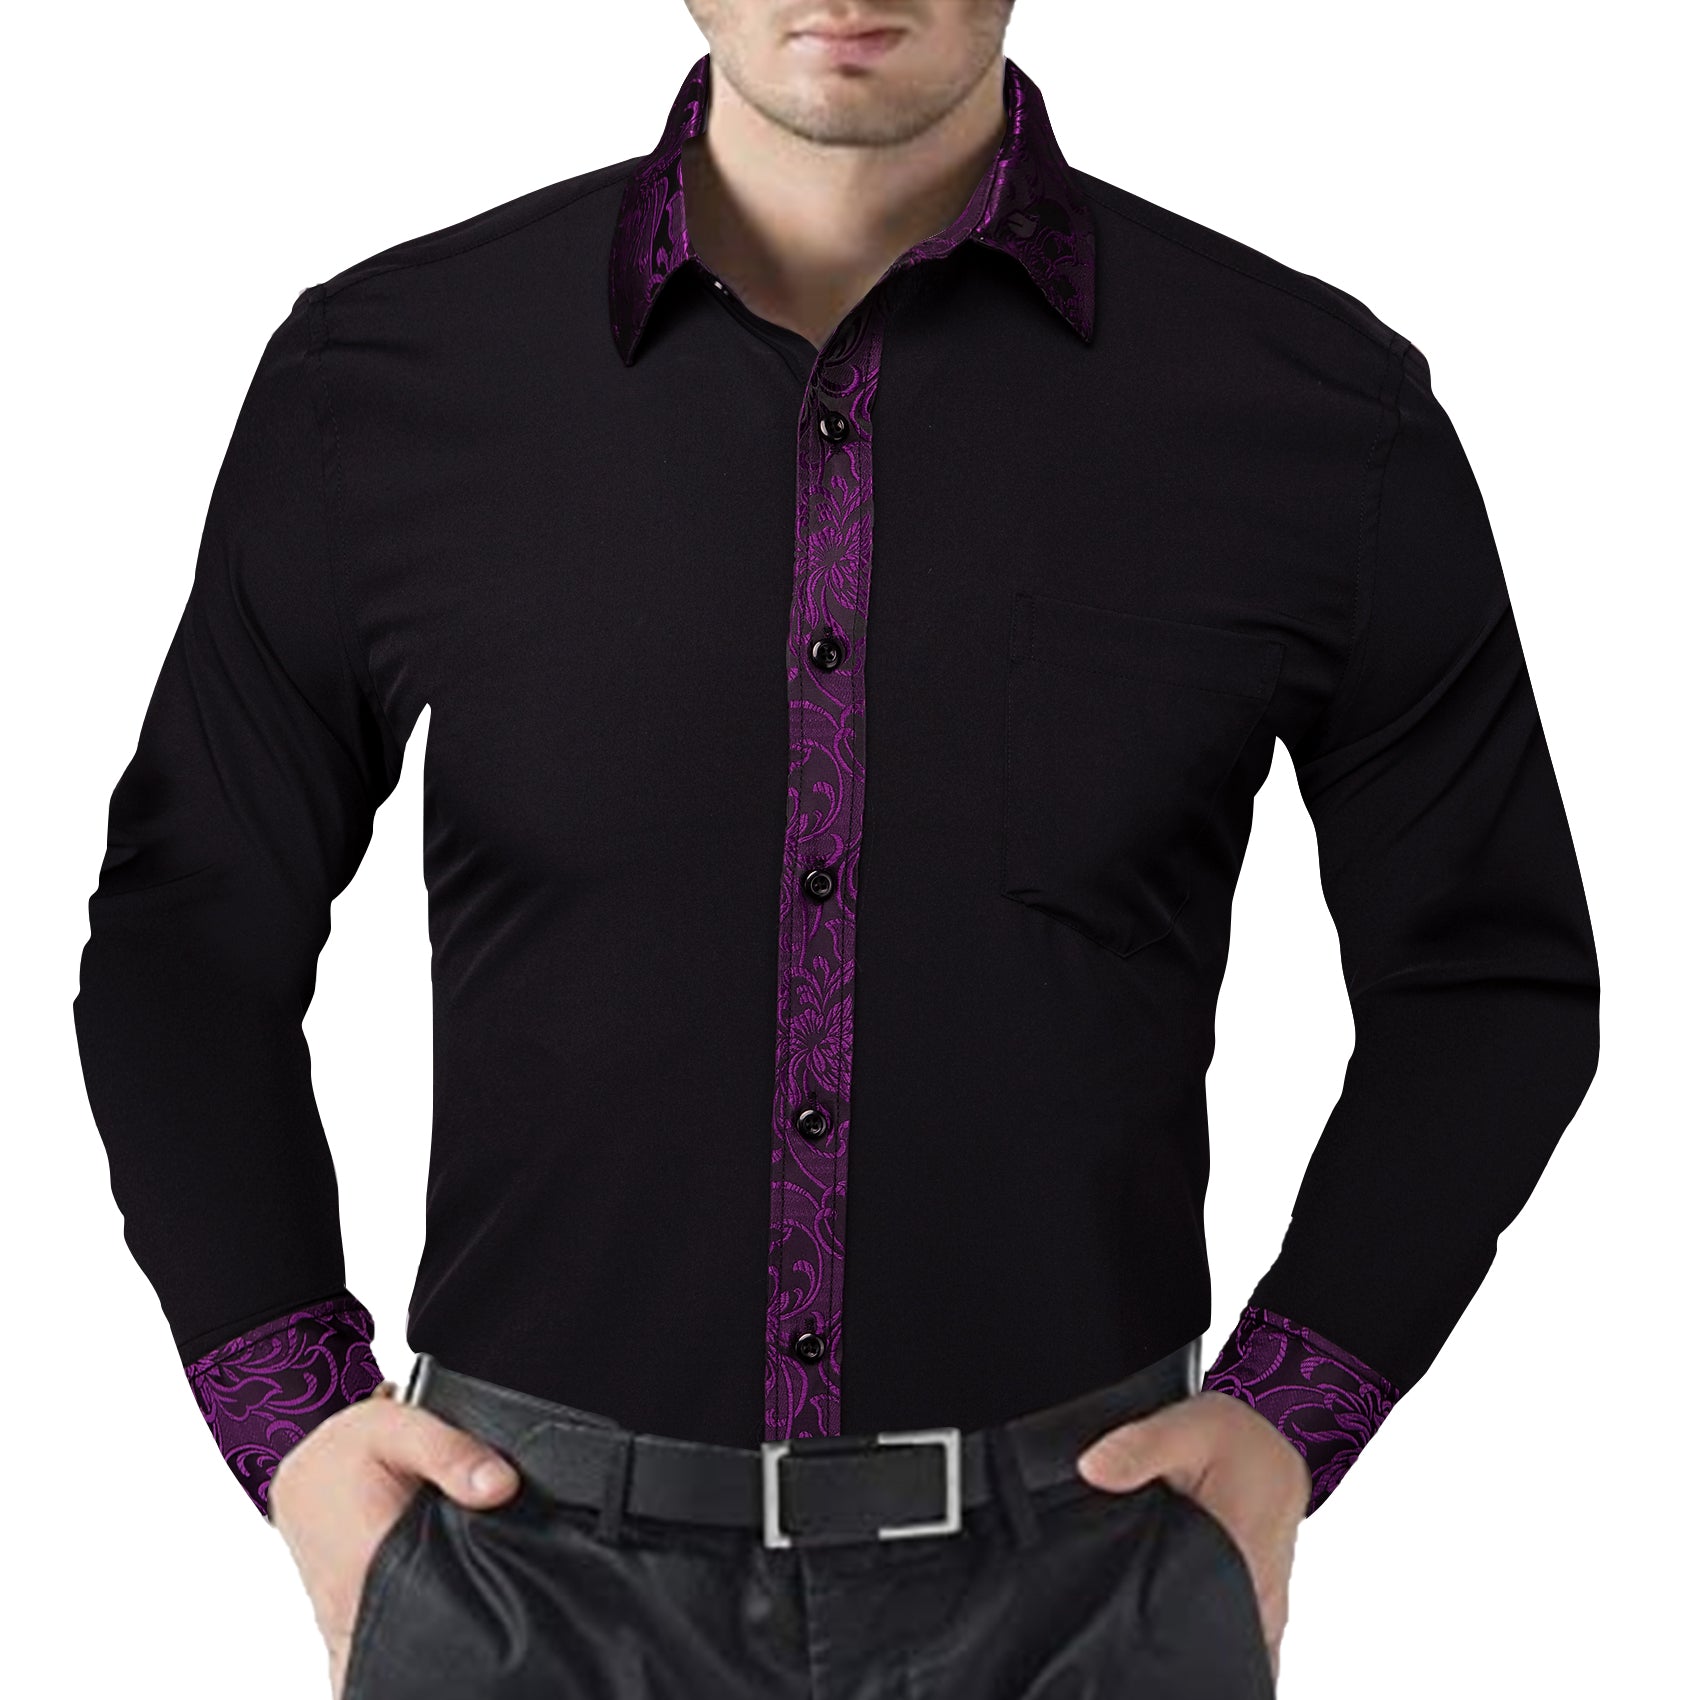 Barry.wang Classy Black Purple Splicing Men's Business Shirt